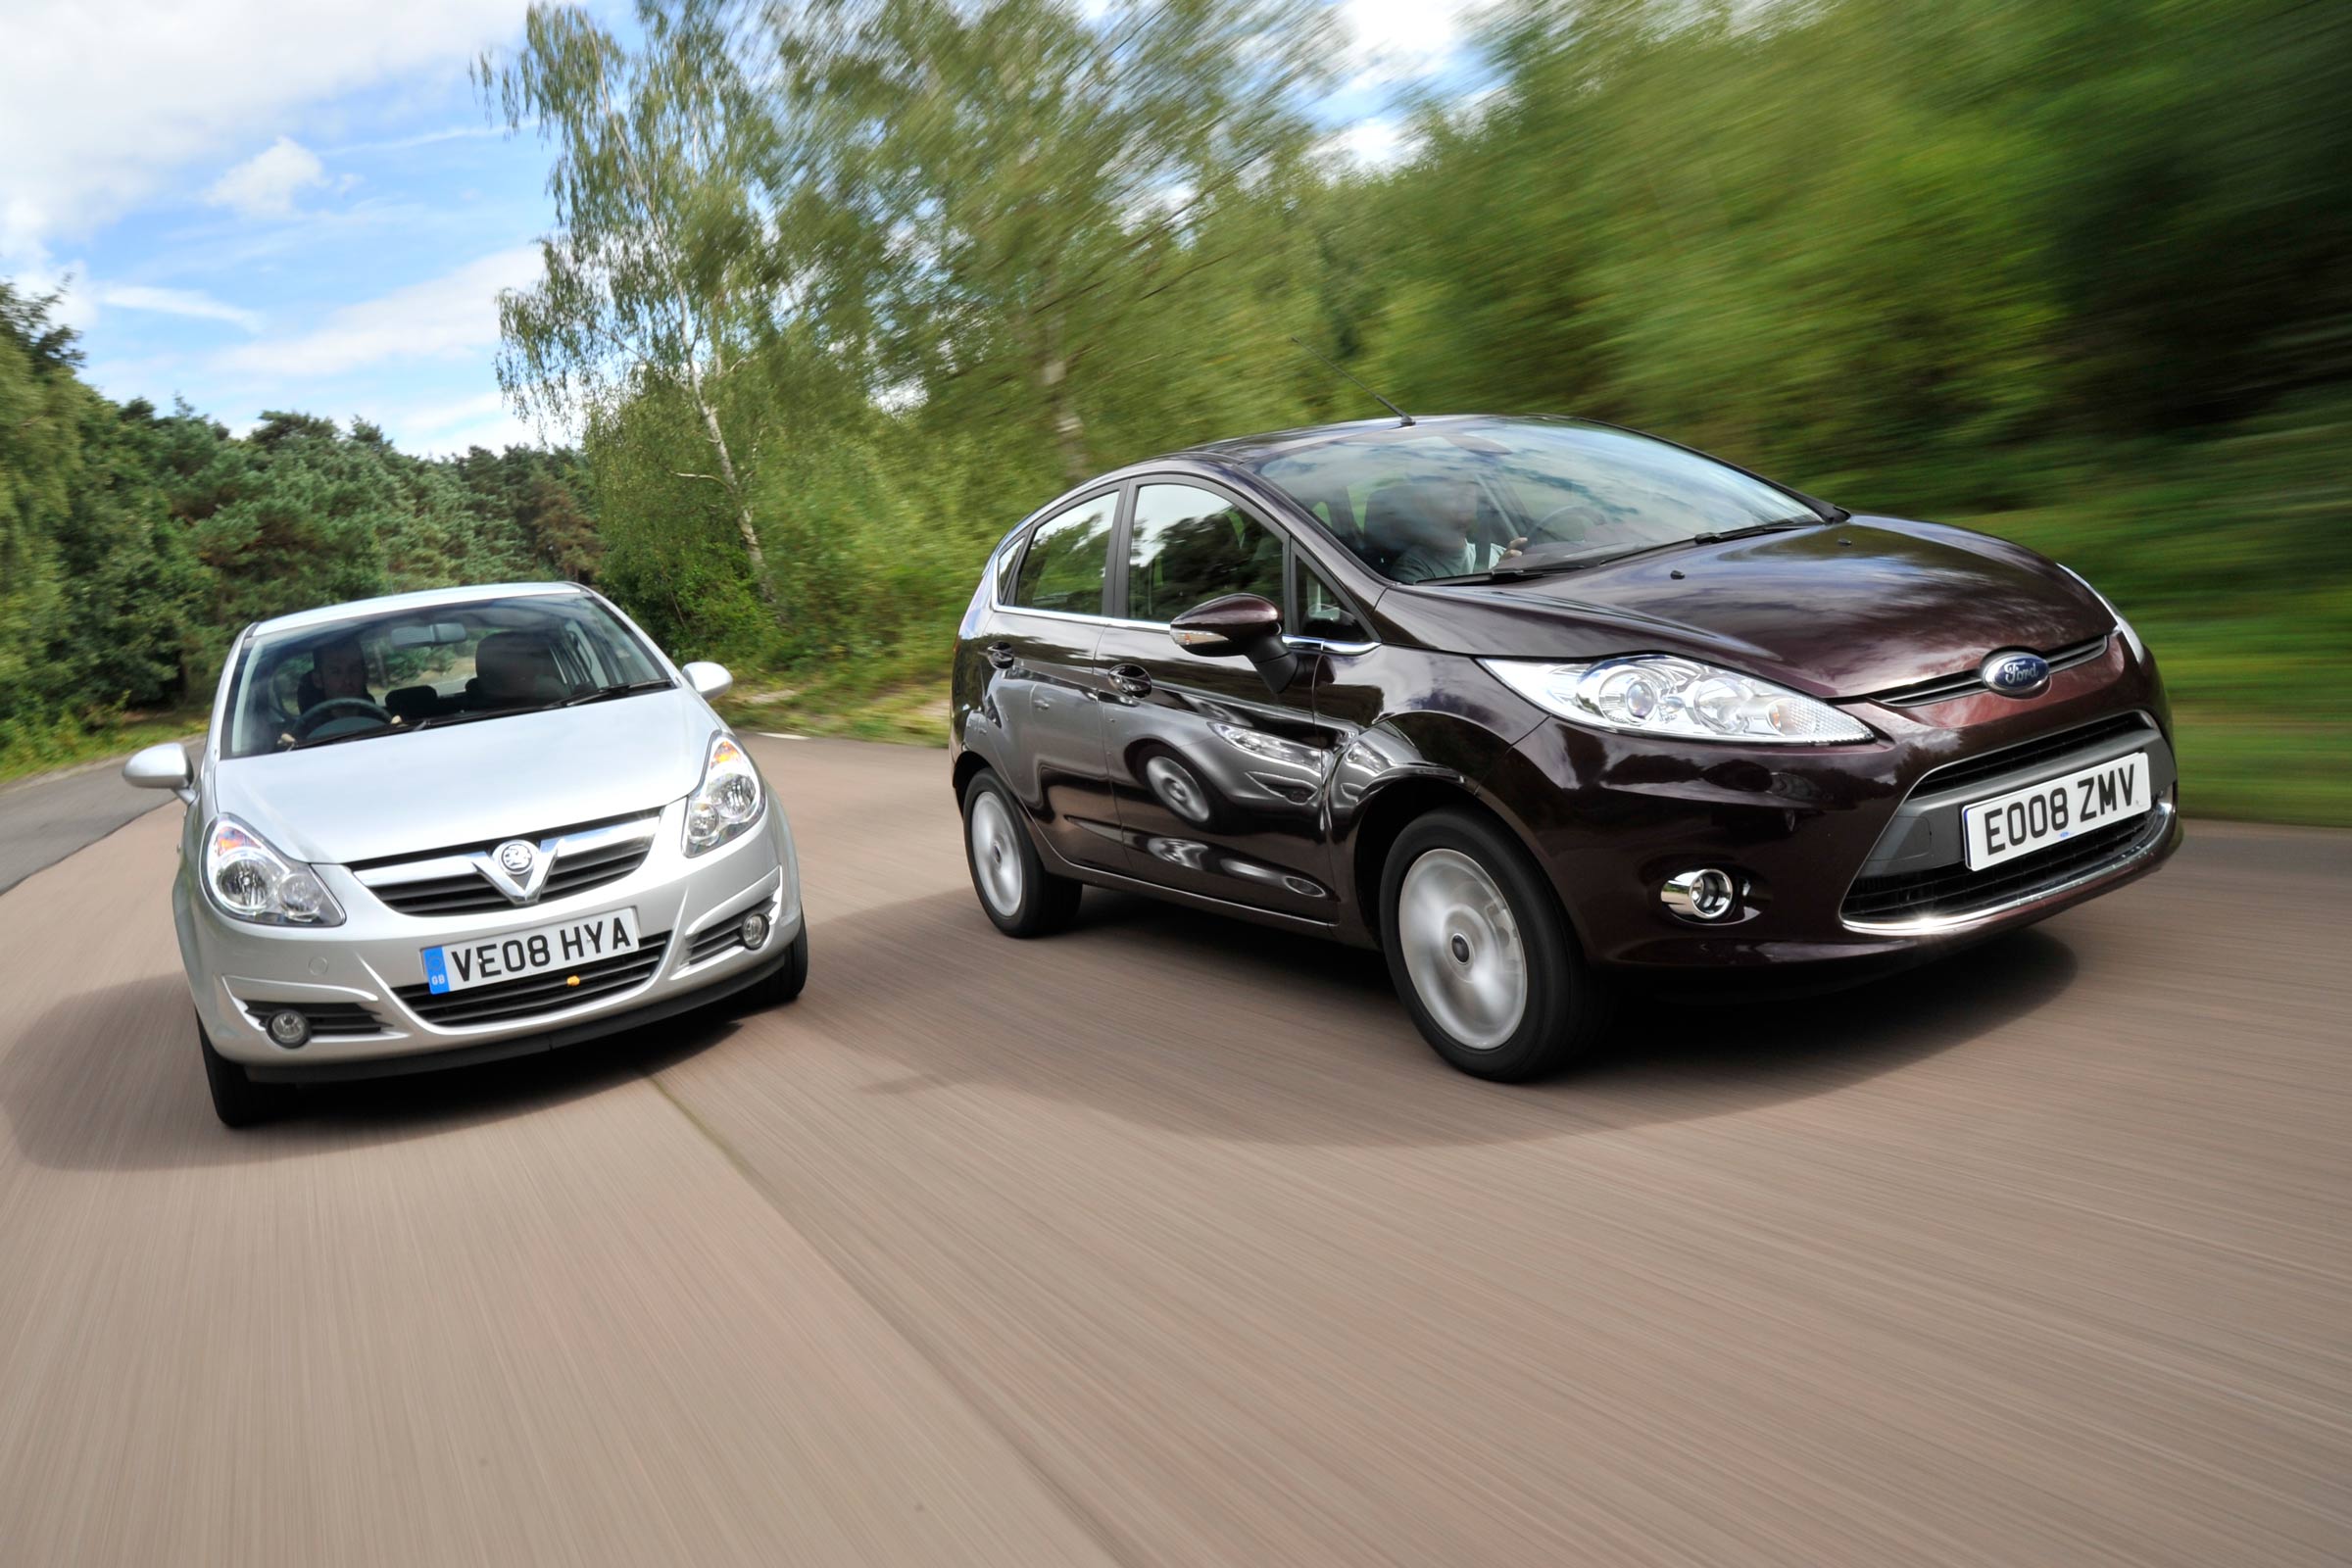 Opel vs Ford. Форд ц Макс Opel Meriva. Ford c Max vs Renault Scenic. Insignia vs a6. Opel v